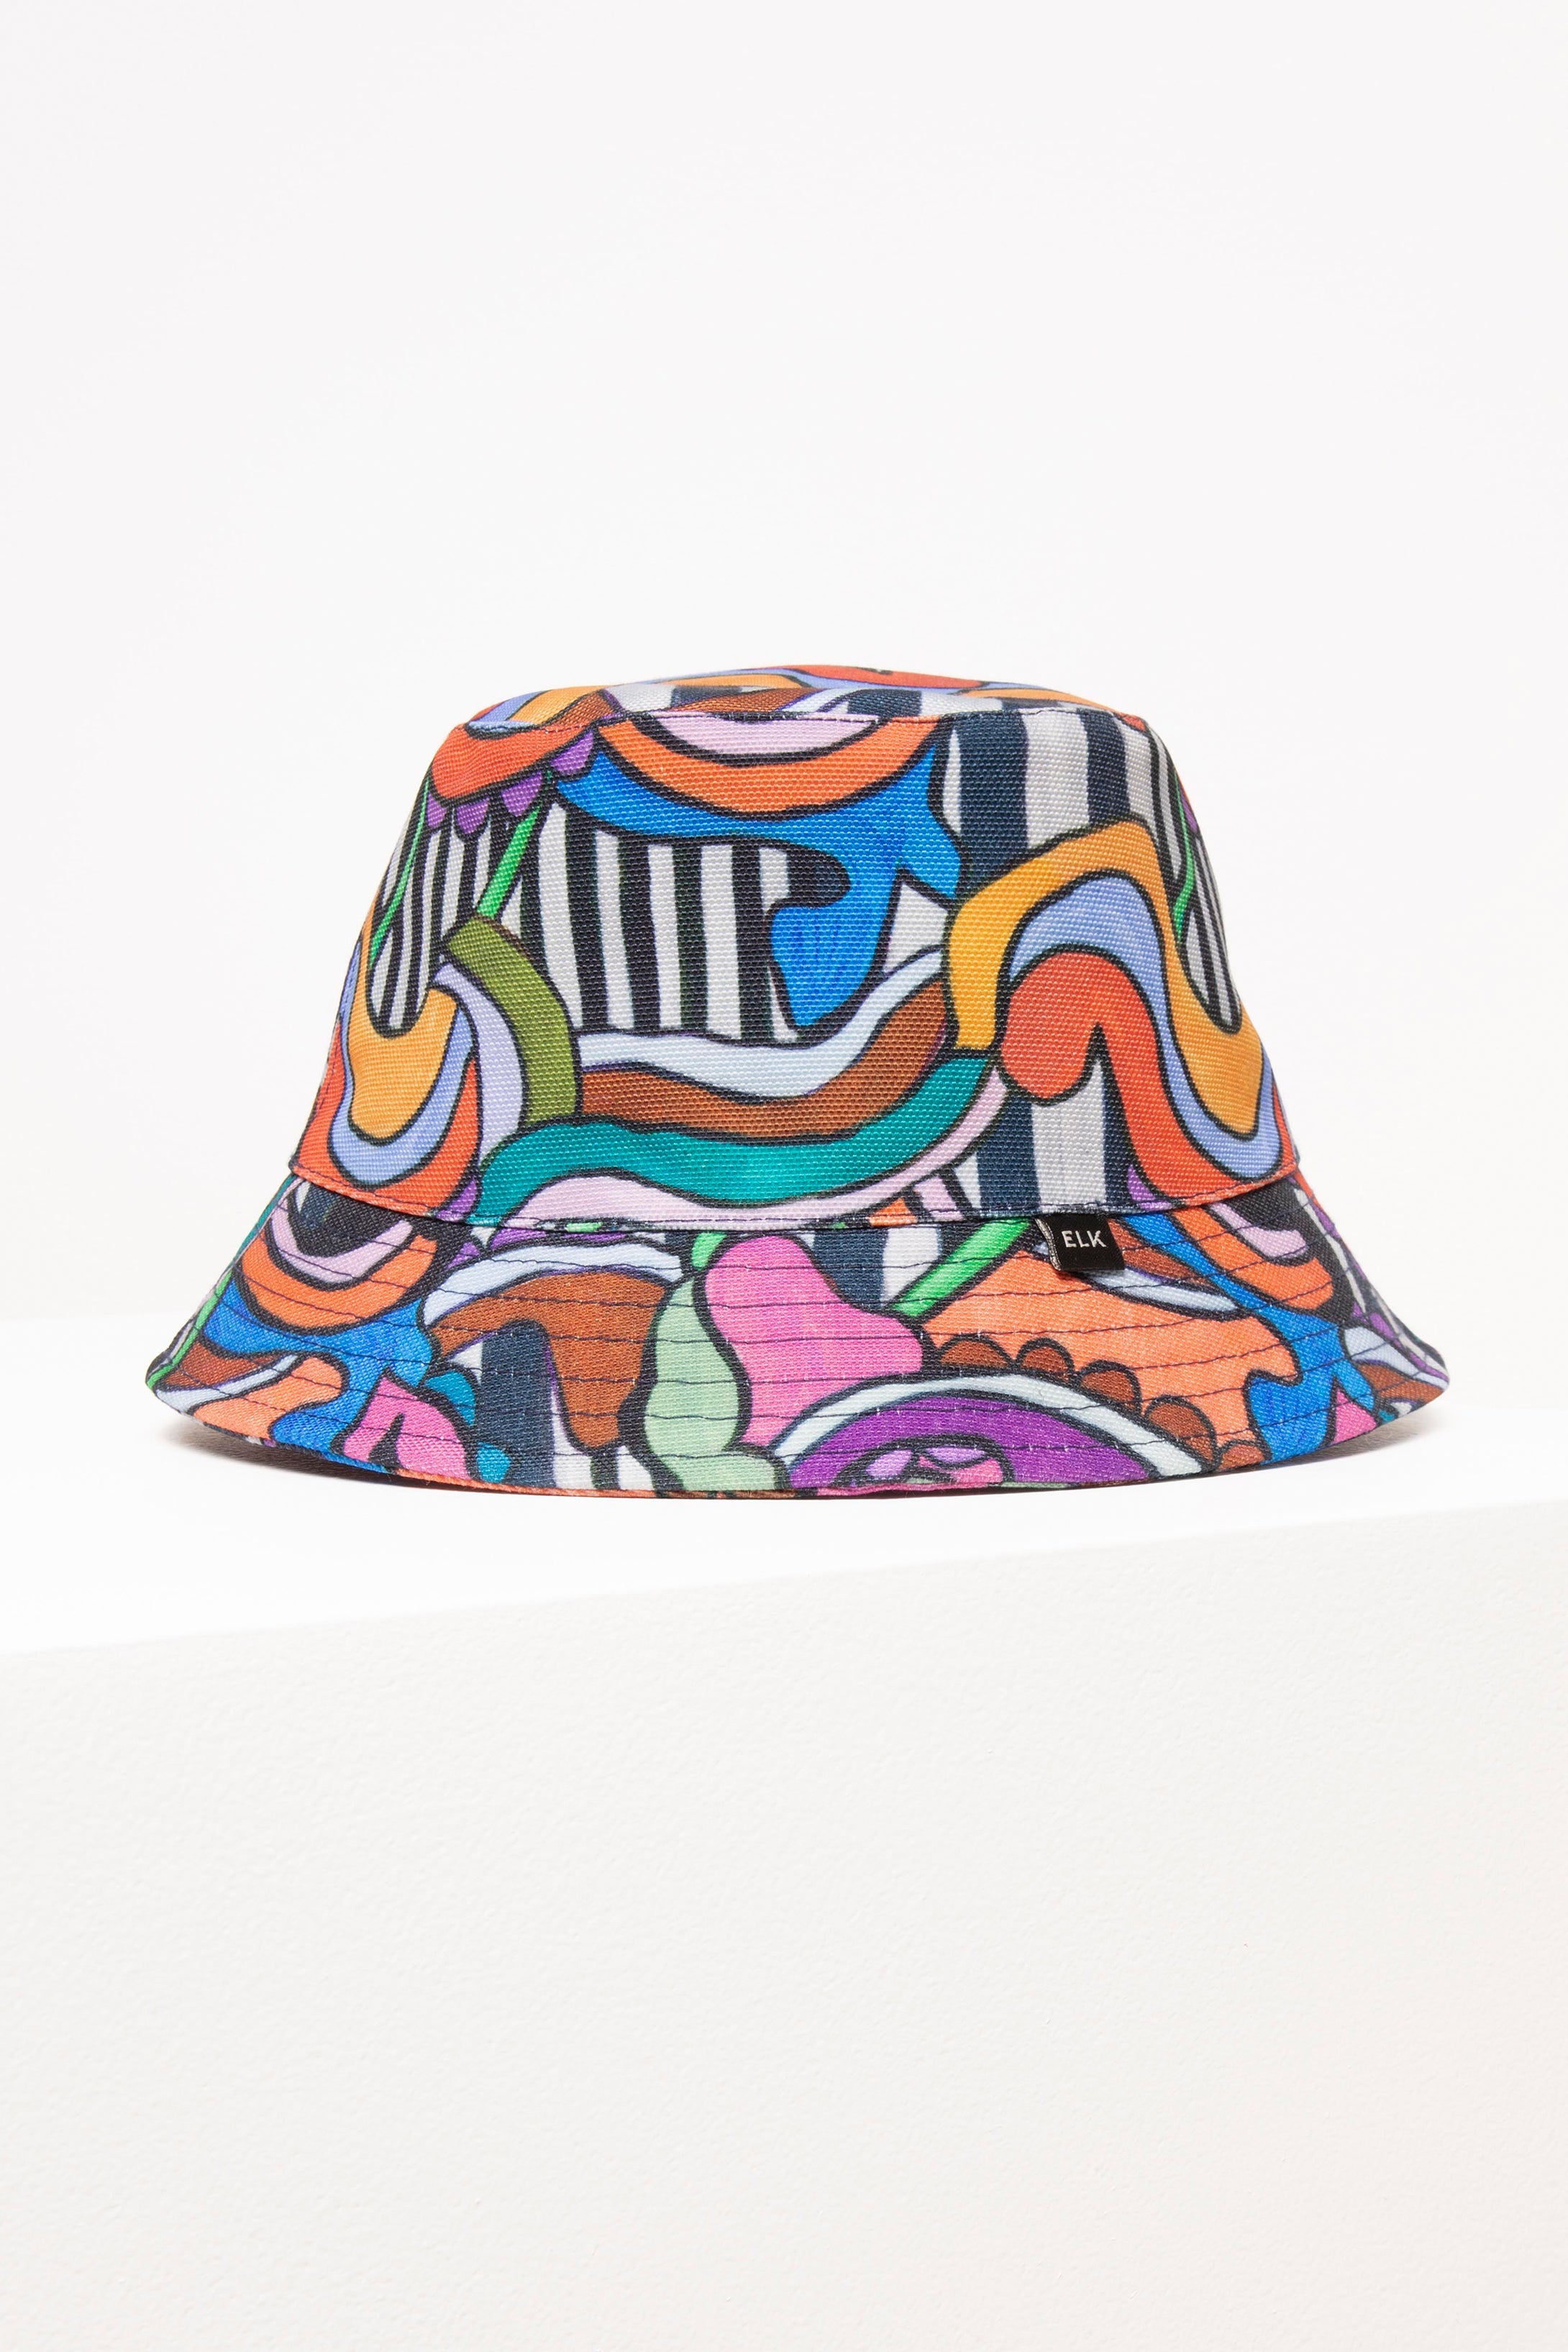 Shop The Emra Recyled Fabric Print Bucket Hat – ELK AU